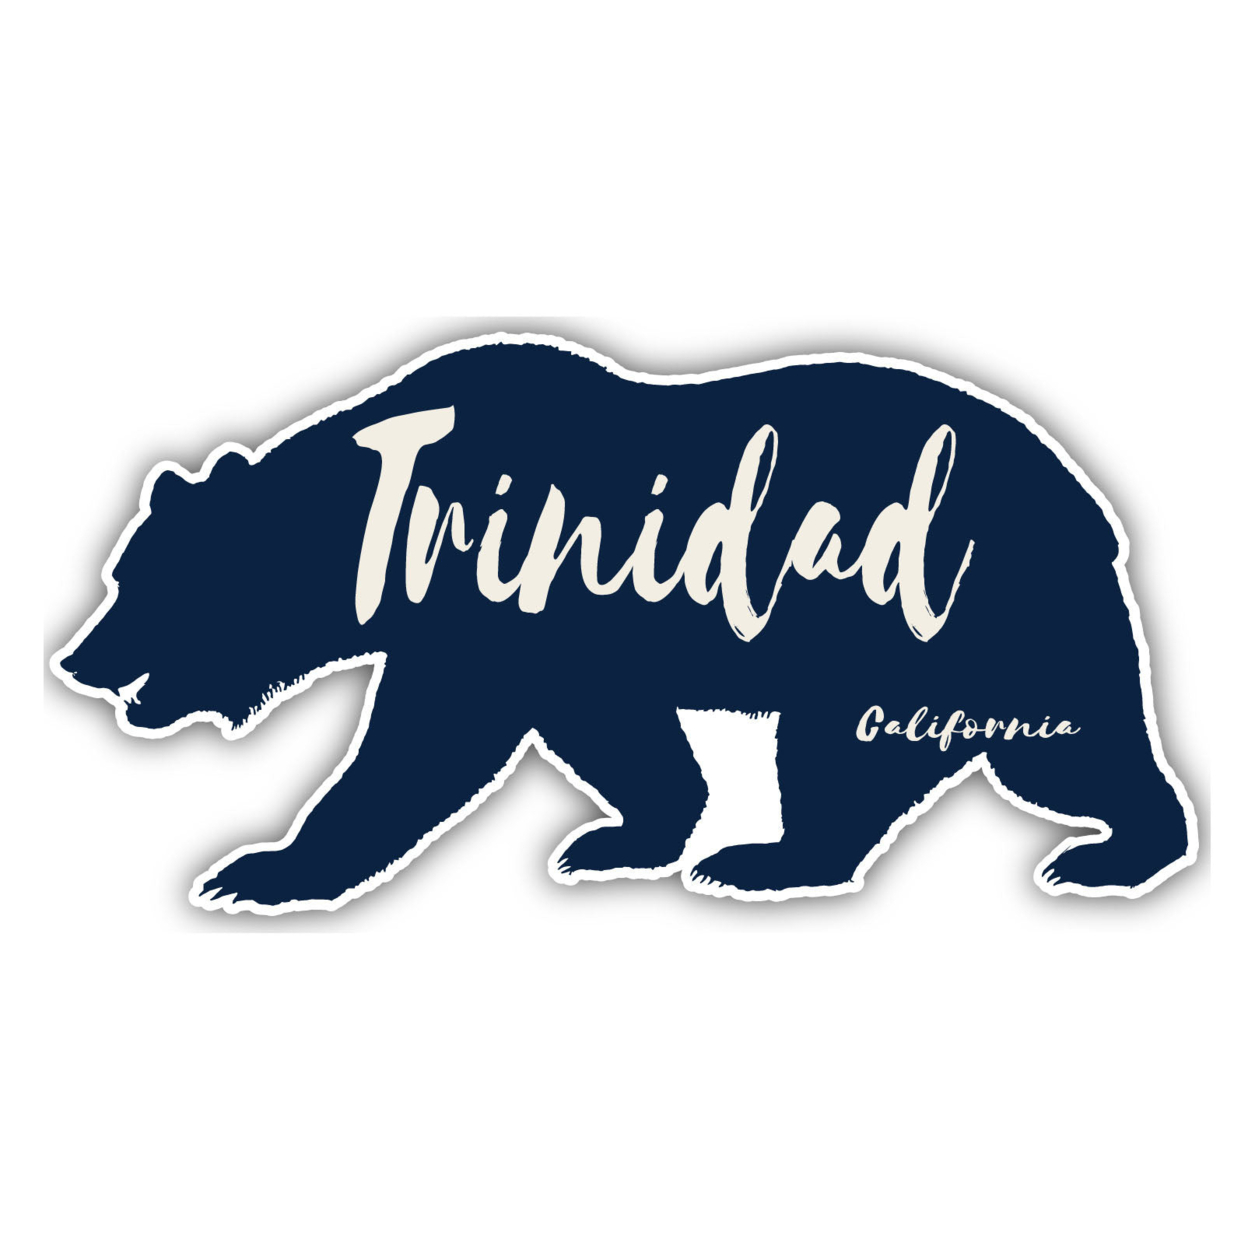 Trinidad California Souvenir Decorative Stickers (Choose Theme And Size) - Single Unit, 2-Inch, Camp Life